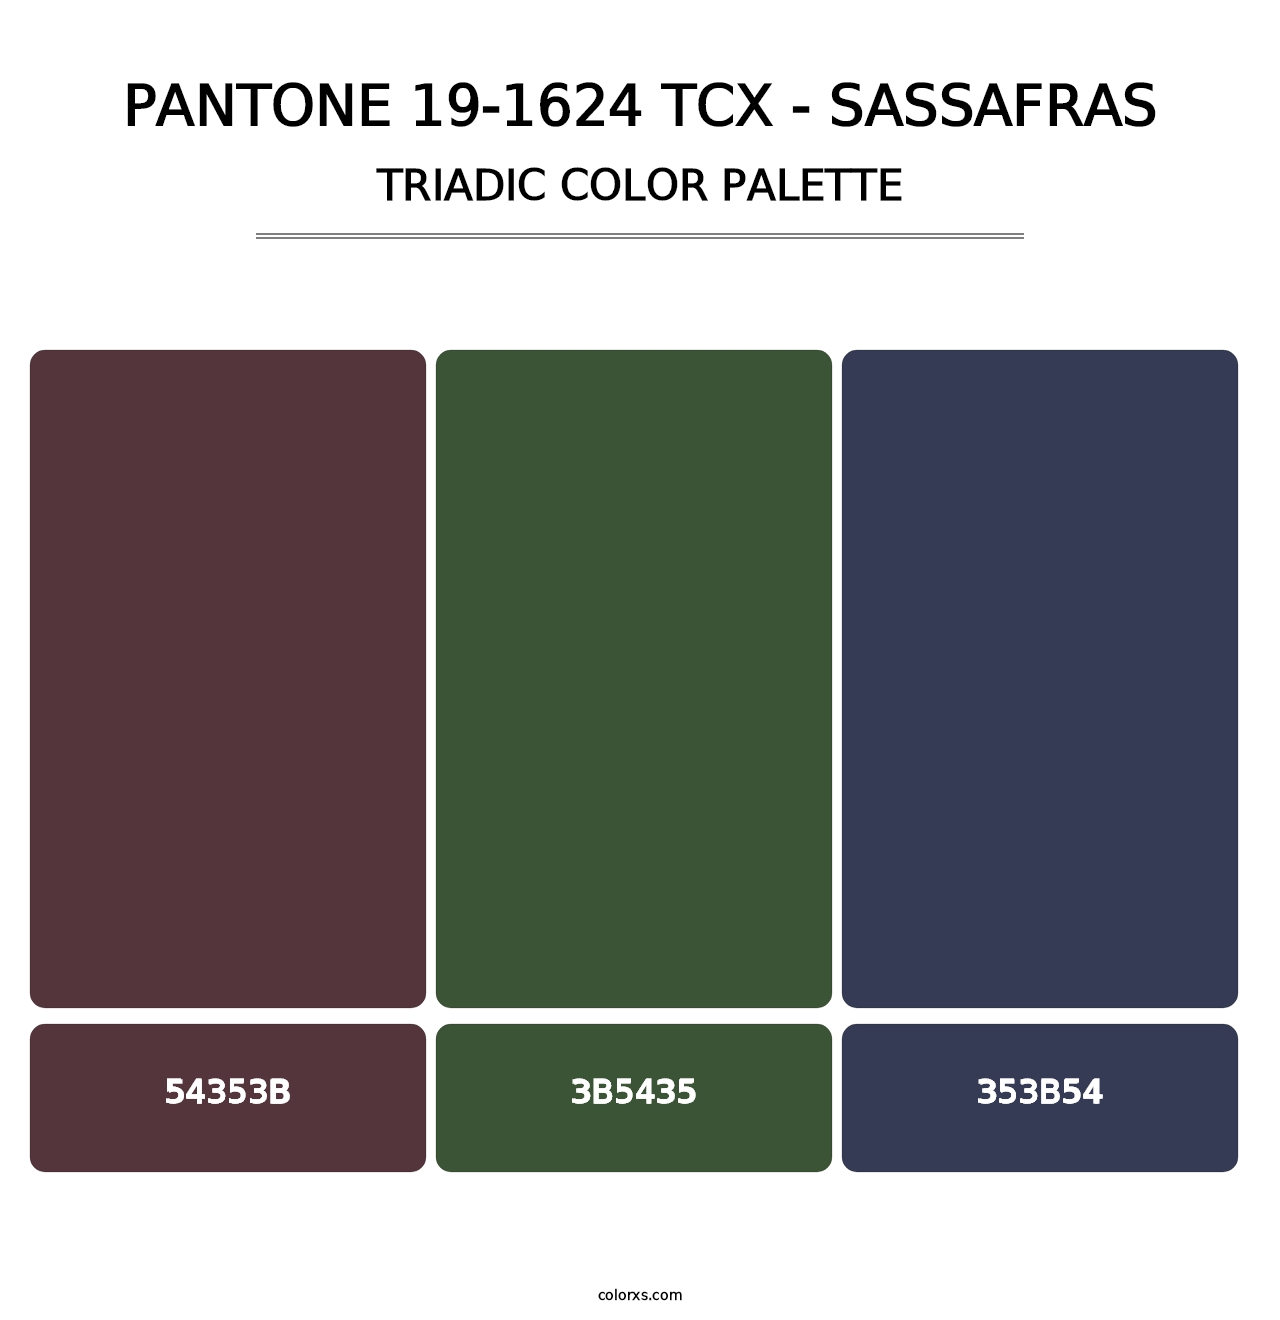 PANTONE 19-1624 TCX - Sassafras - Triadic Color Palette